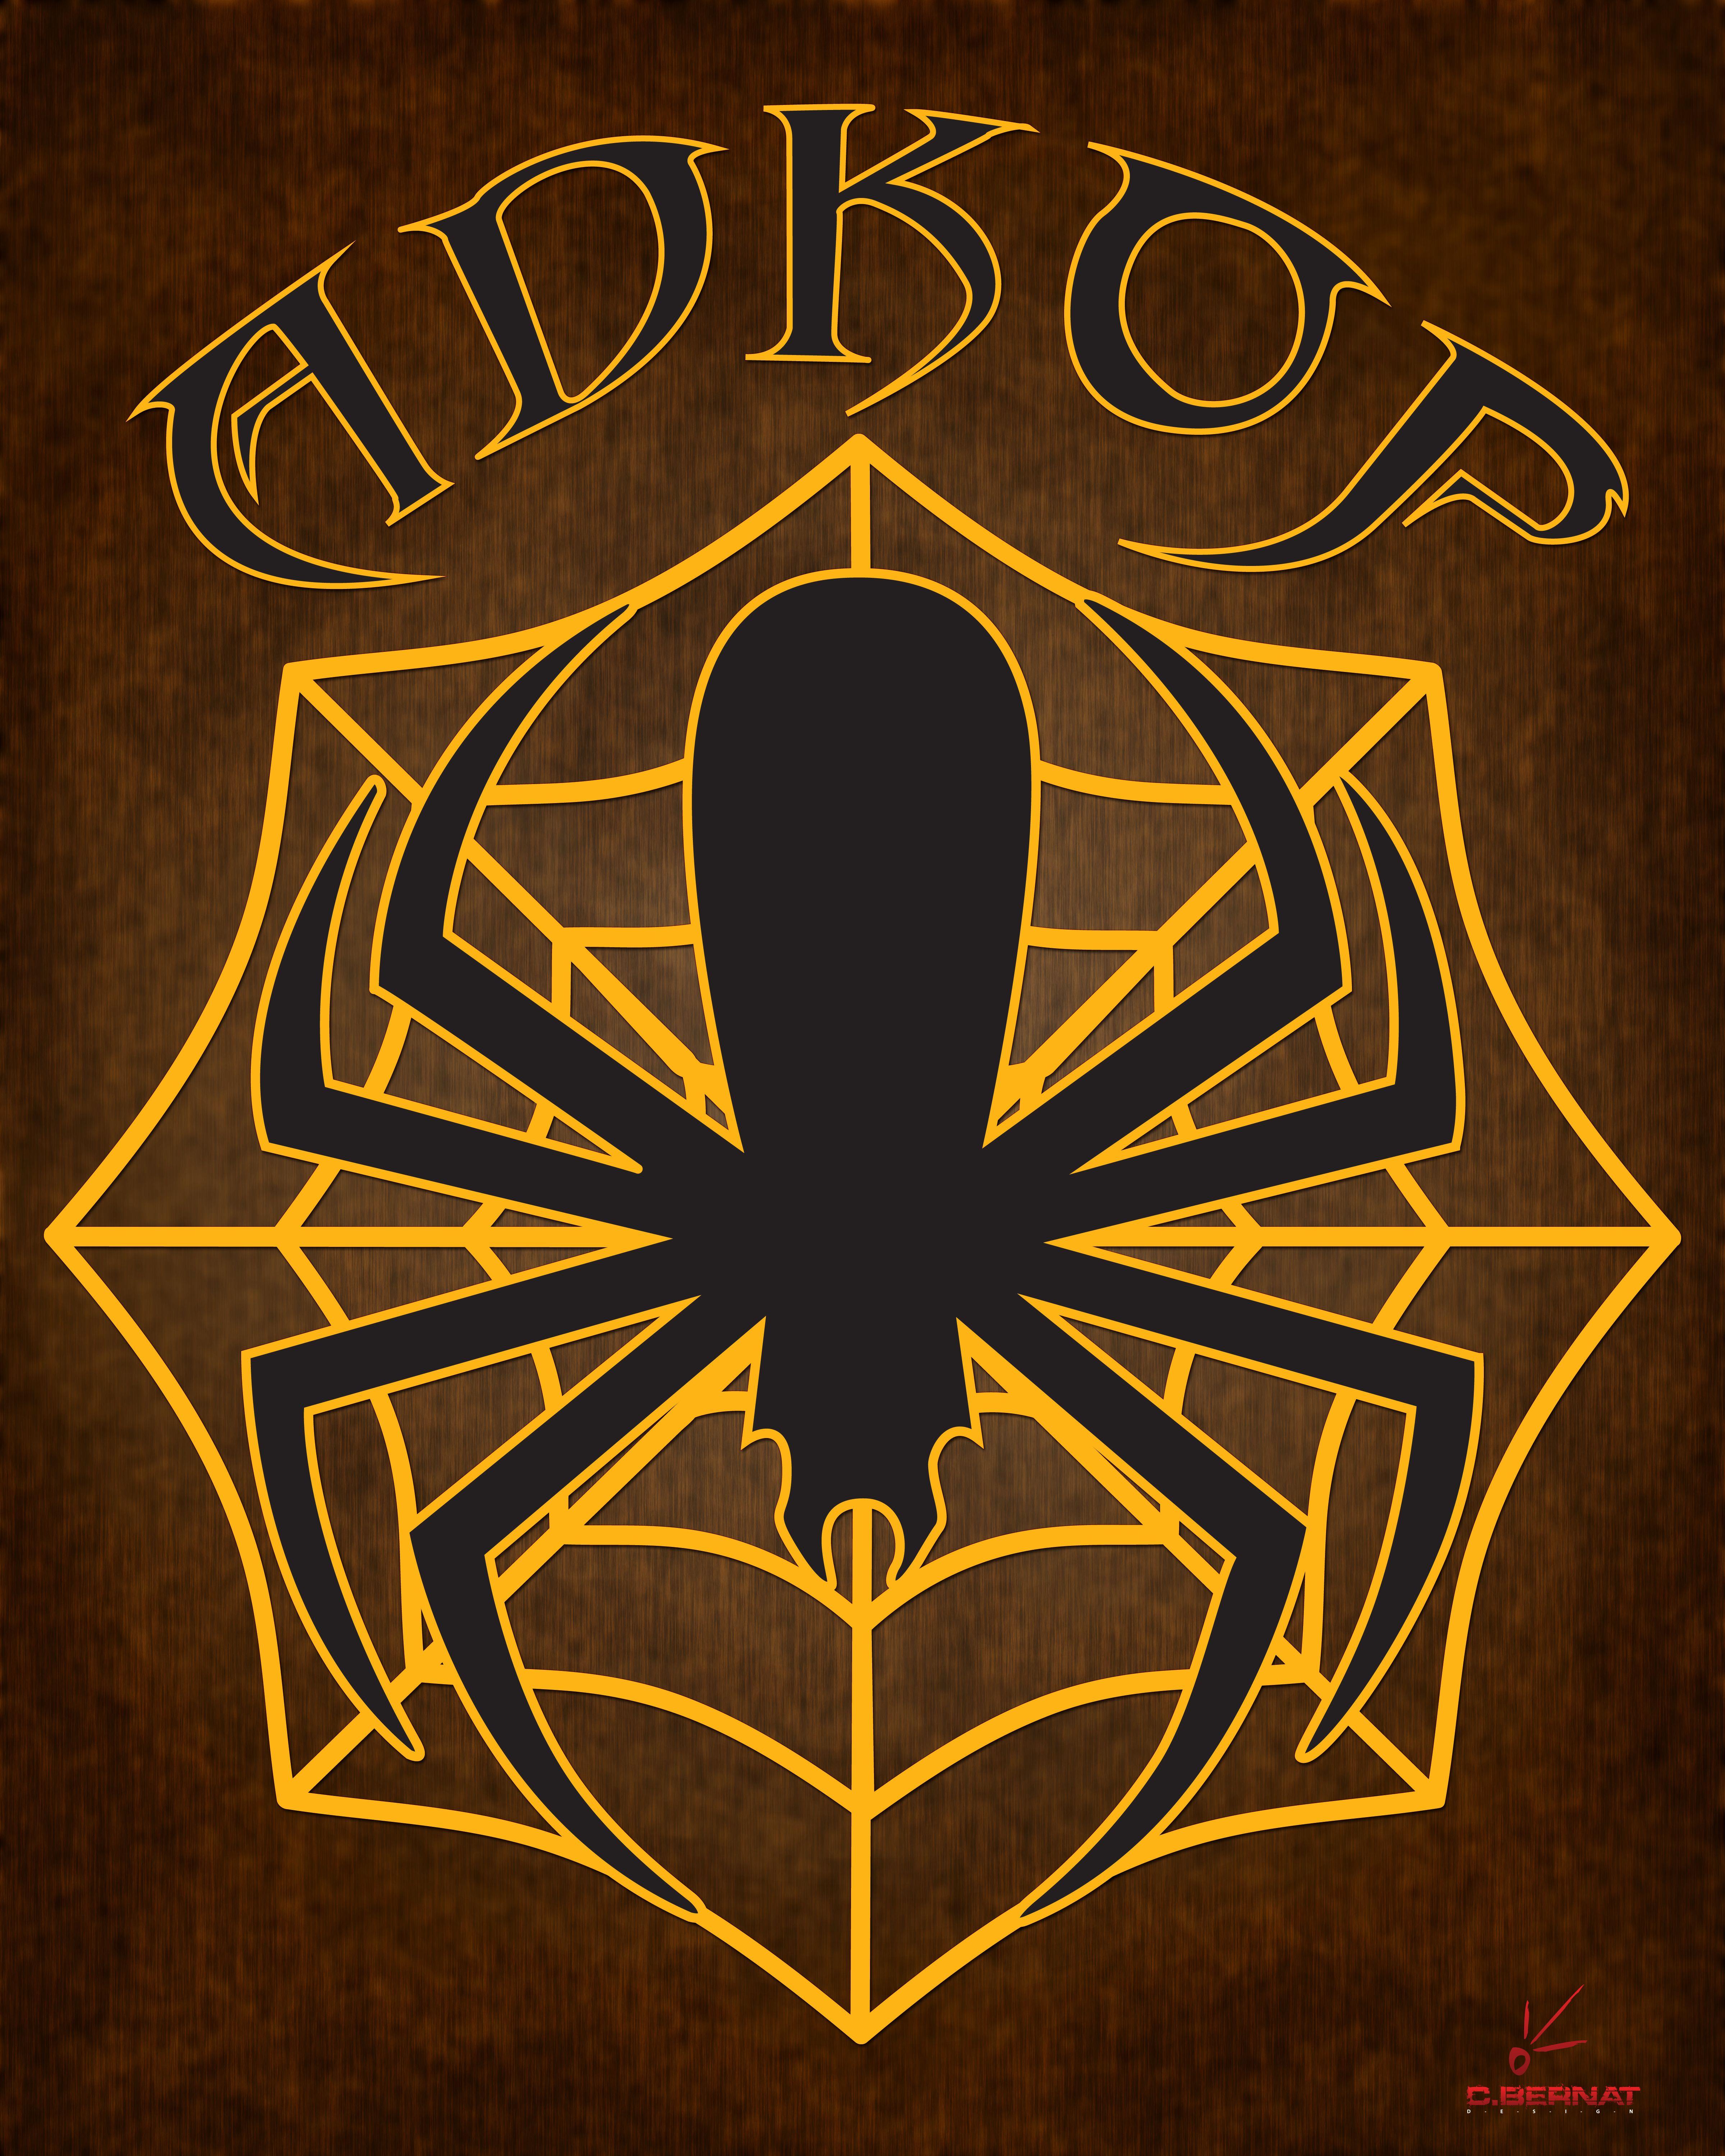 Cold Spider Logo - Cold – Spider Logo Poster & Tattoo Design | charles bernat